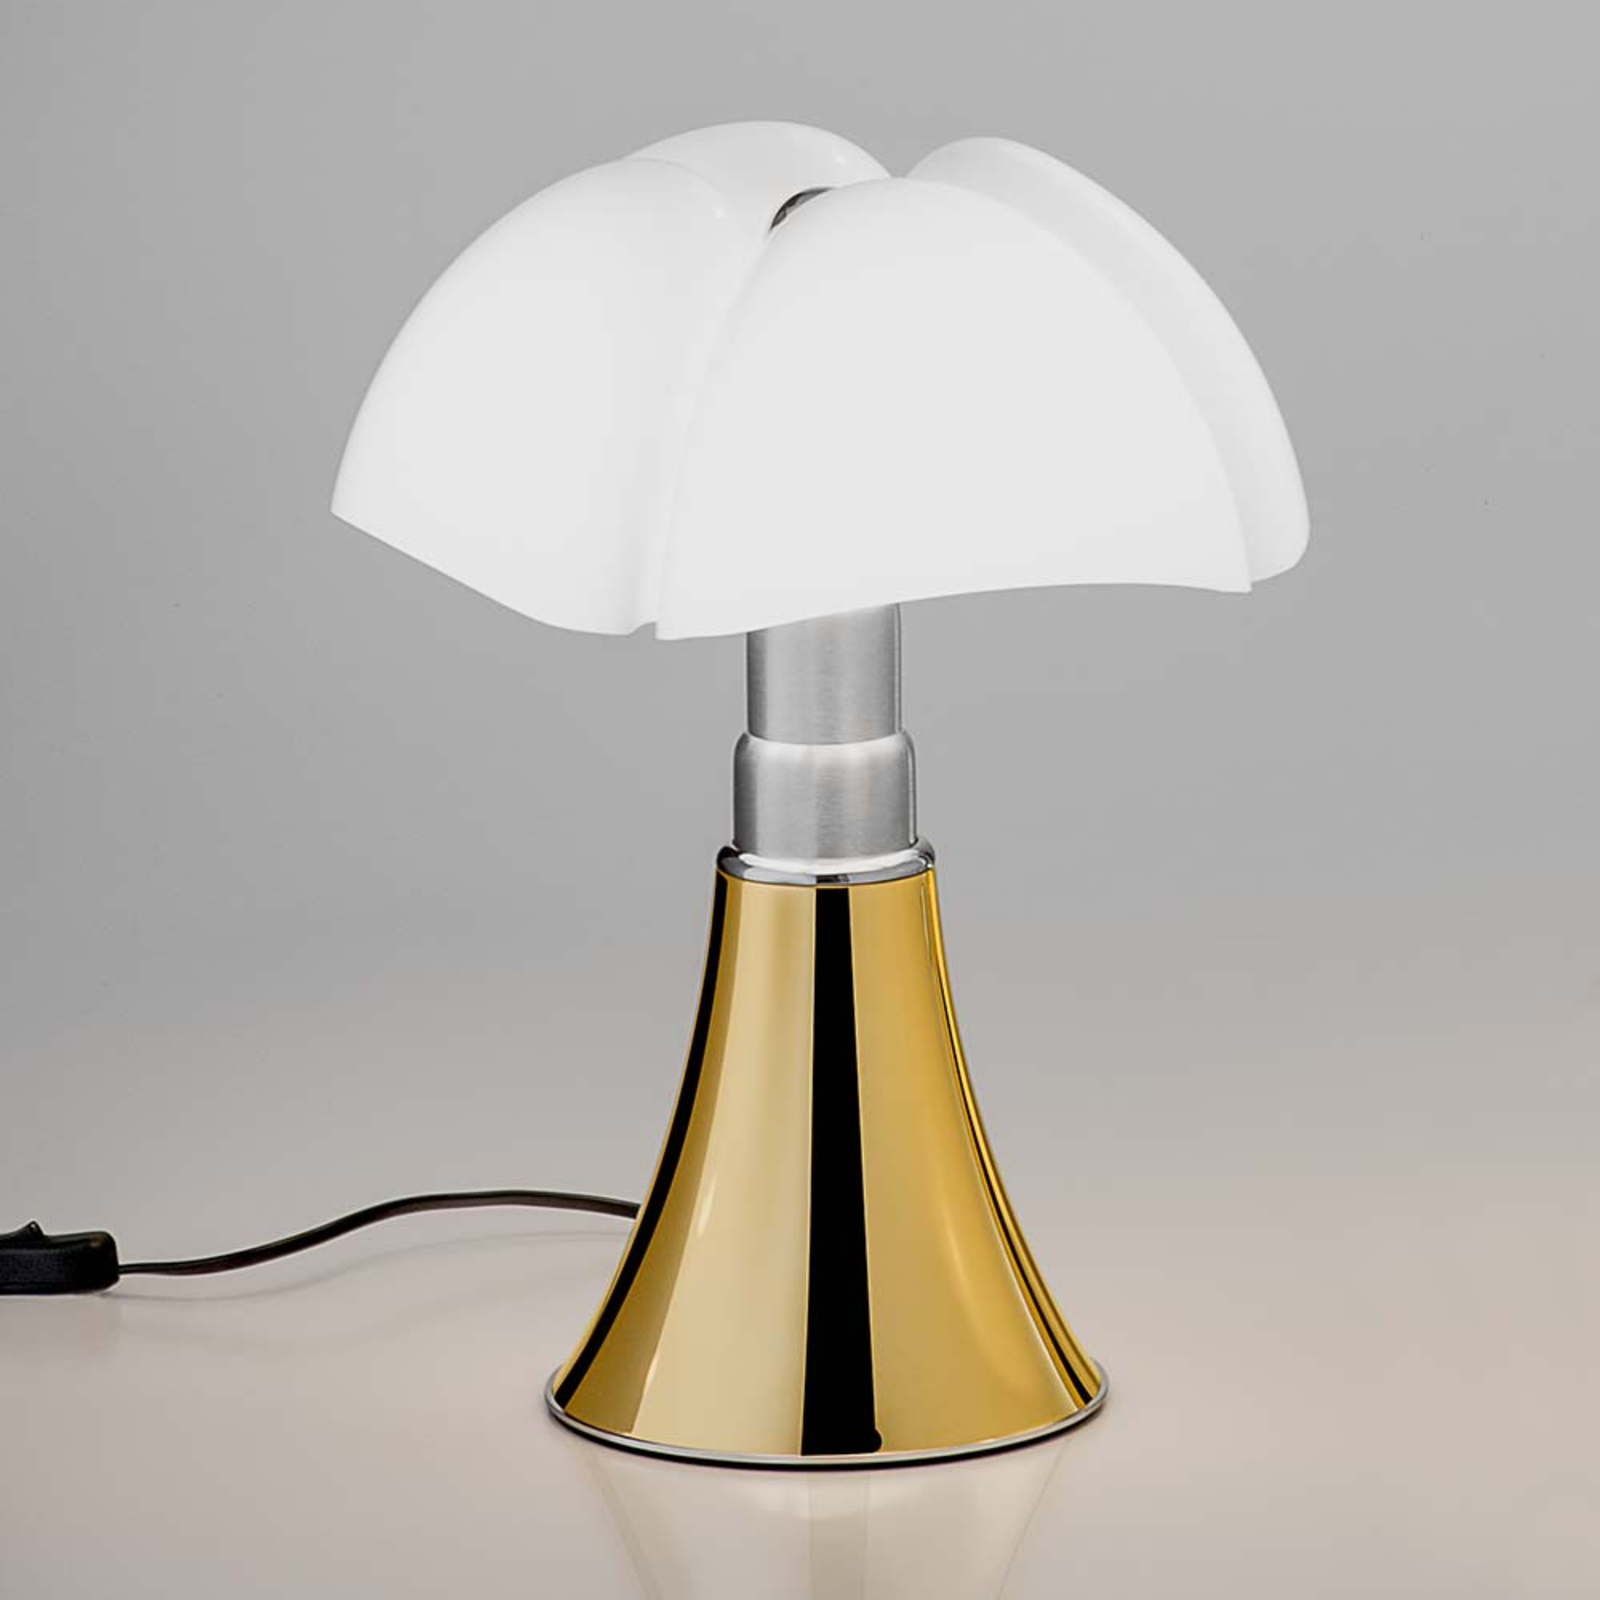 Martinelli Luce Minipipistrello lampe table dorée